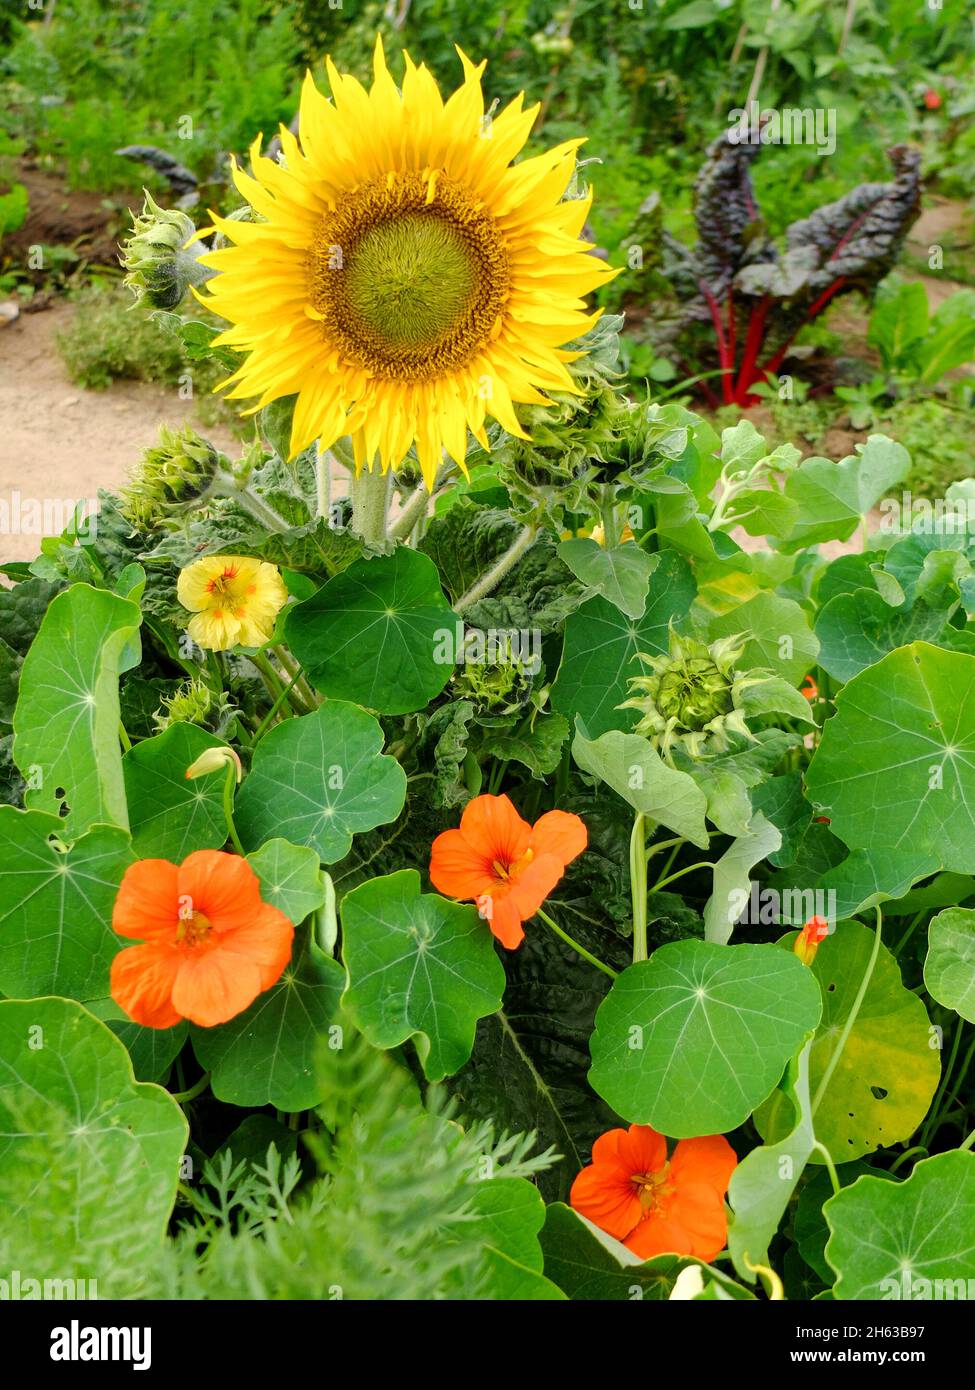 vegetable patch with herbs and flowers: swiss chard (beta vulgaris),nasturtium (tropaeolum),sunflower (helianthus) Stock Photo